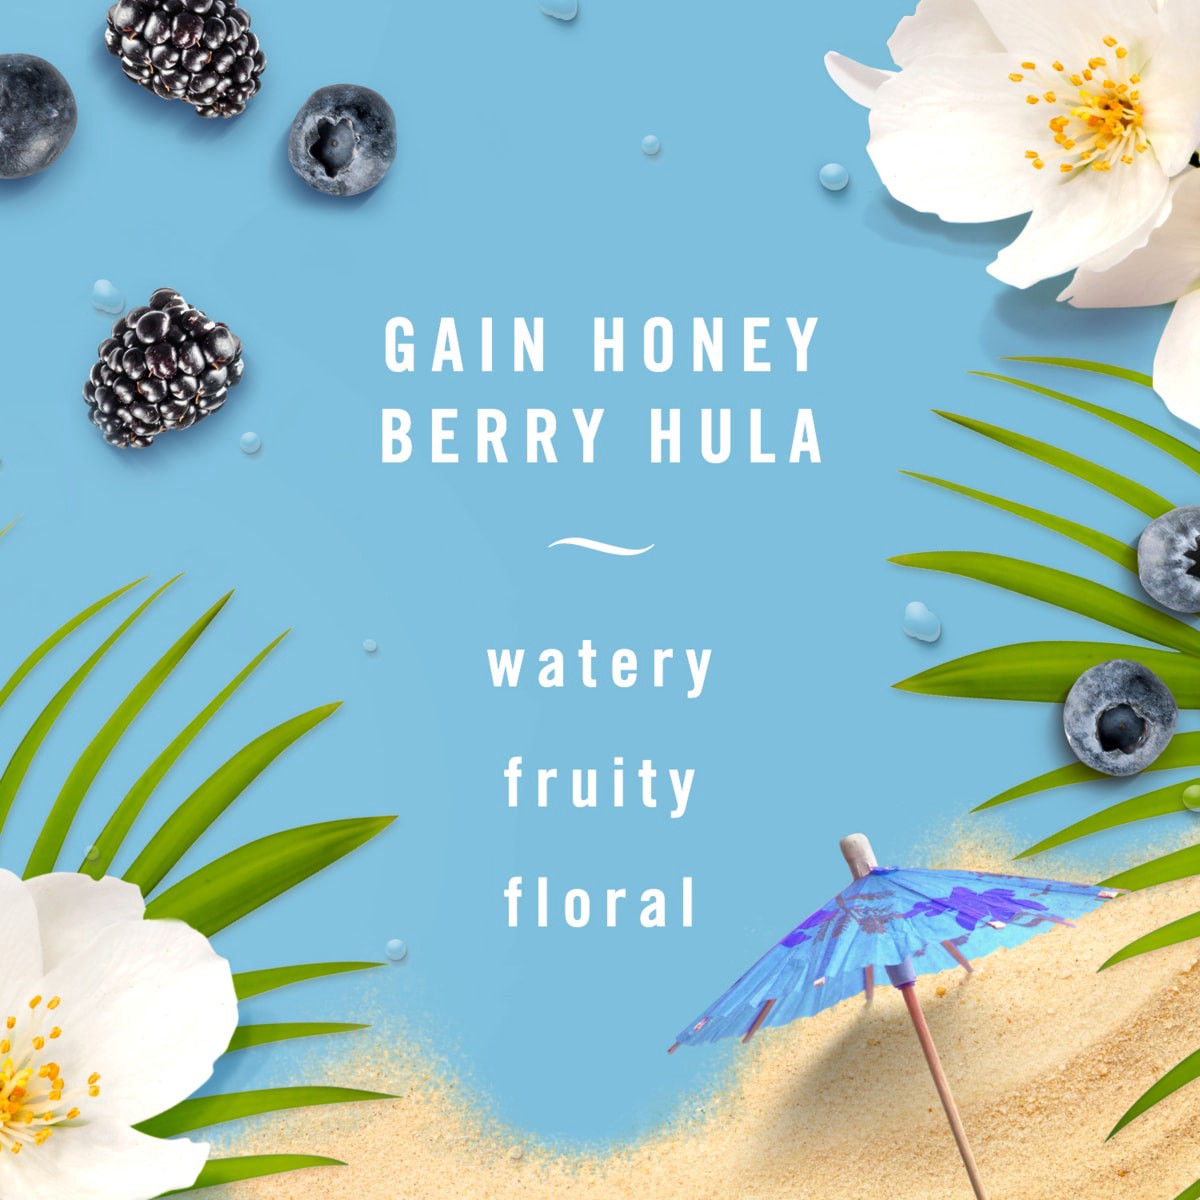 slide 7 of 25, Febreze Honey Berry Hula Air Freshener with Gain Scent, 8.8 fl oz